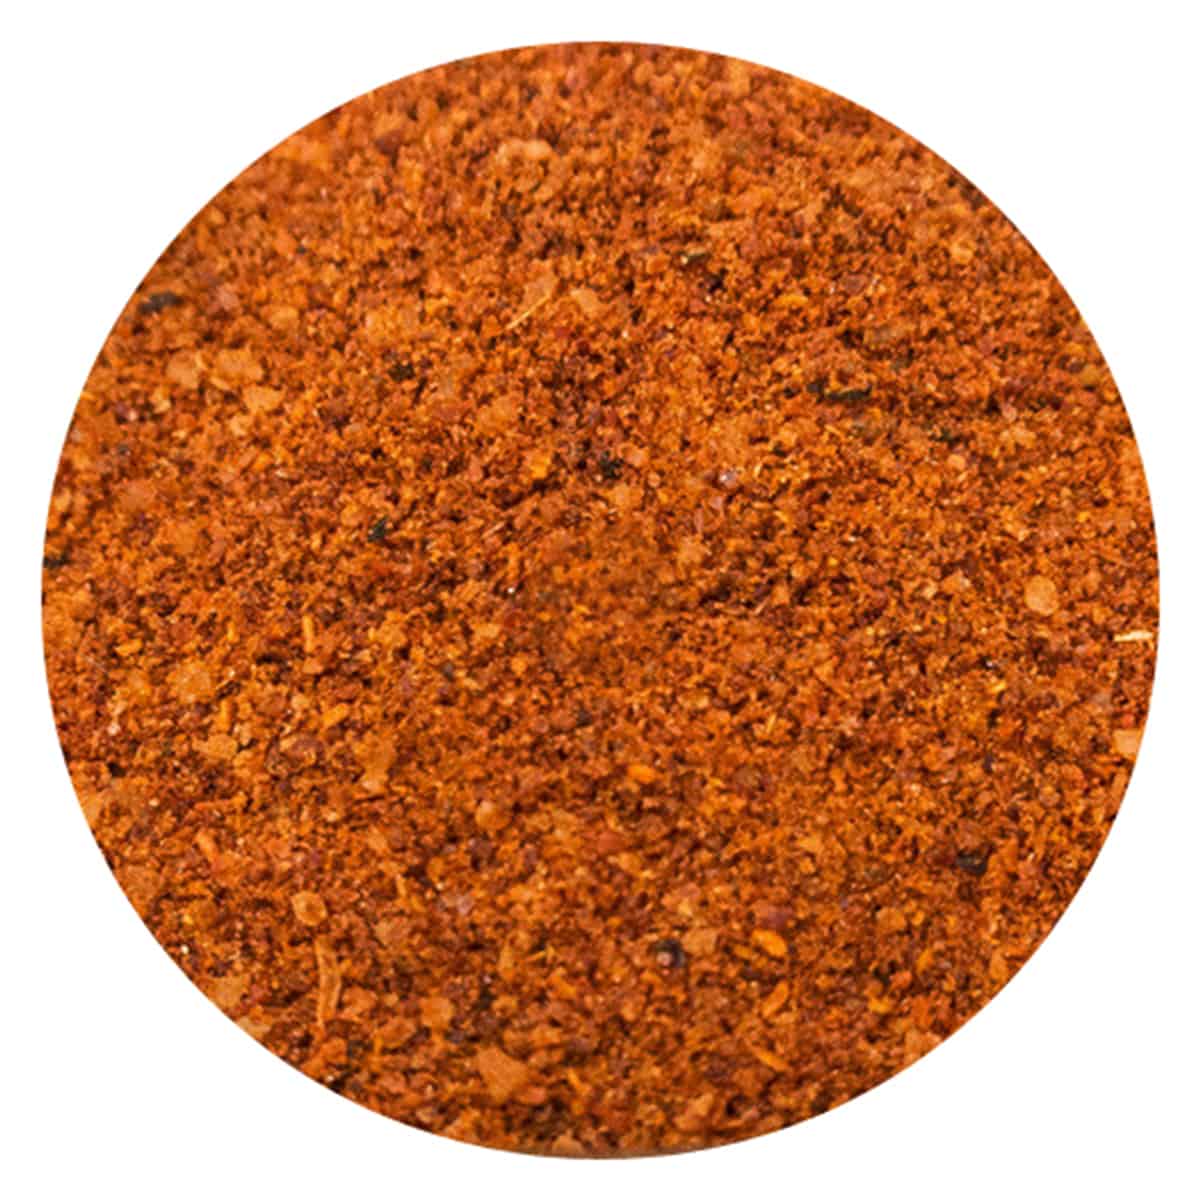 Buy IAG Foods Berbere Spice Mix - 1 kg